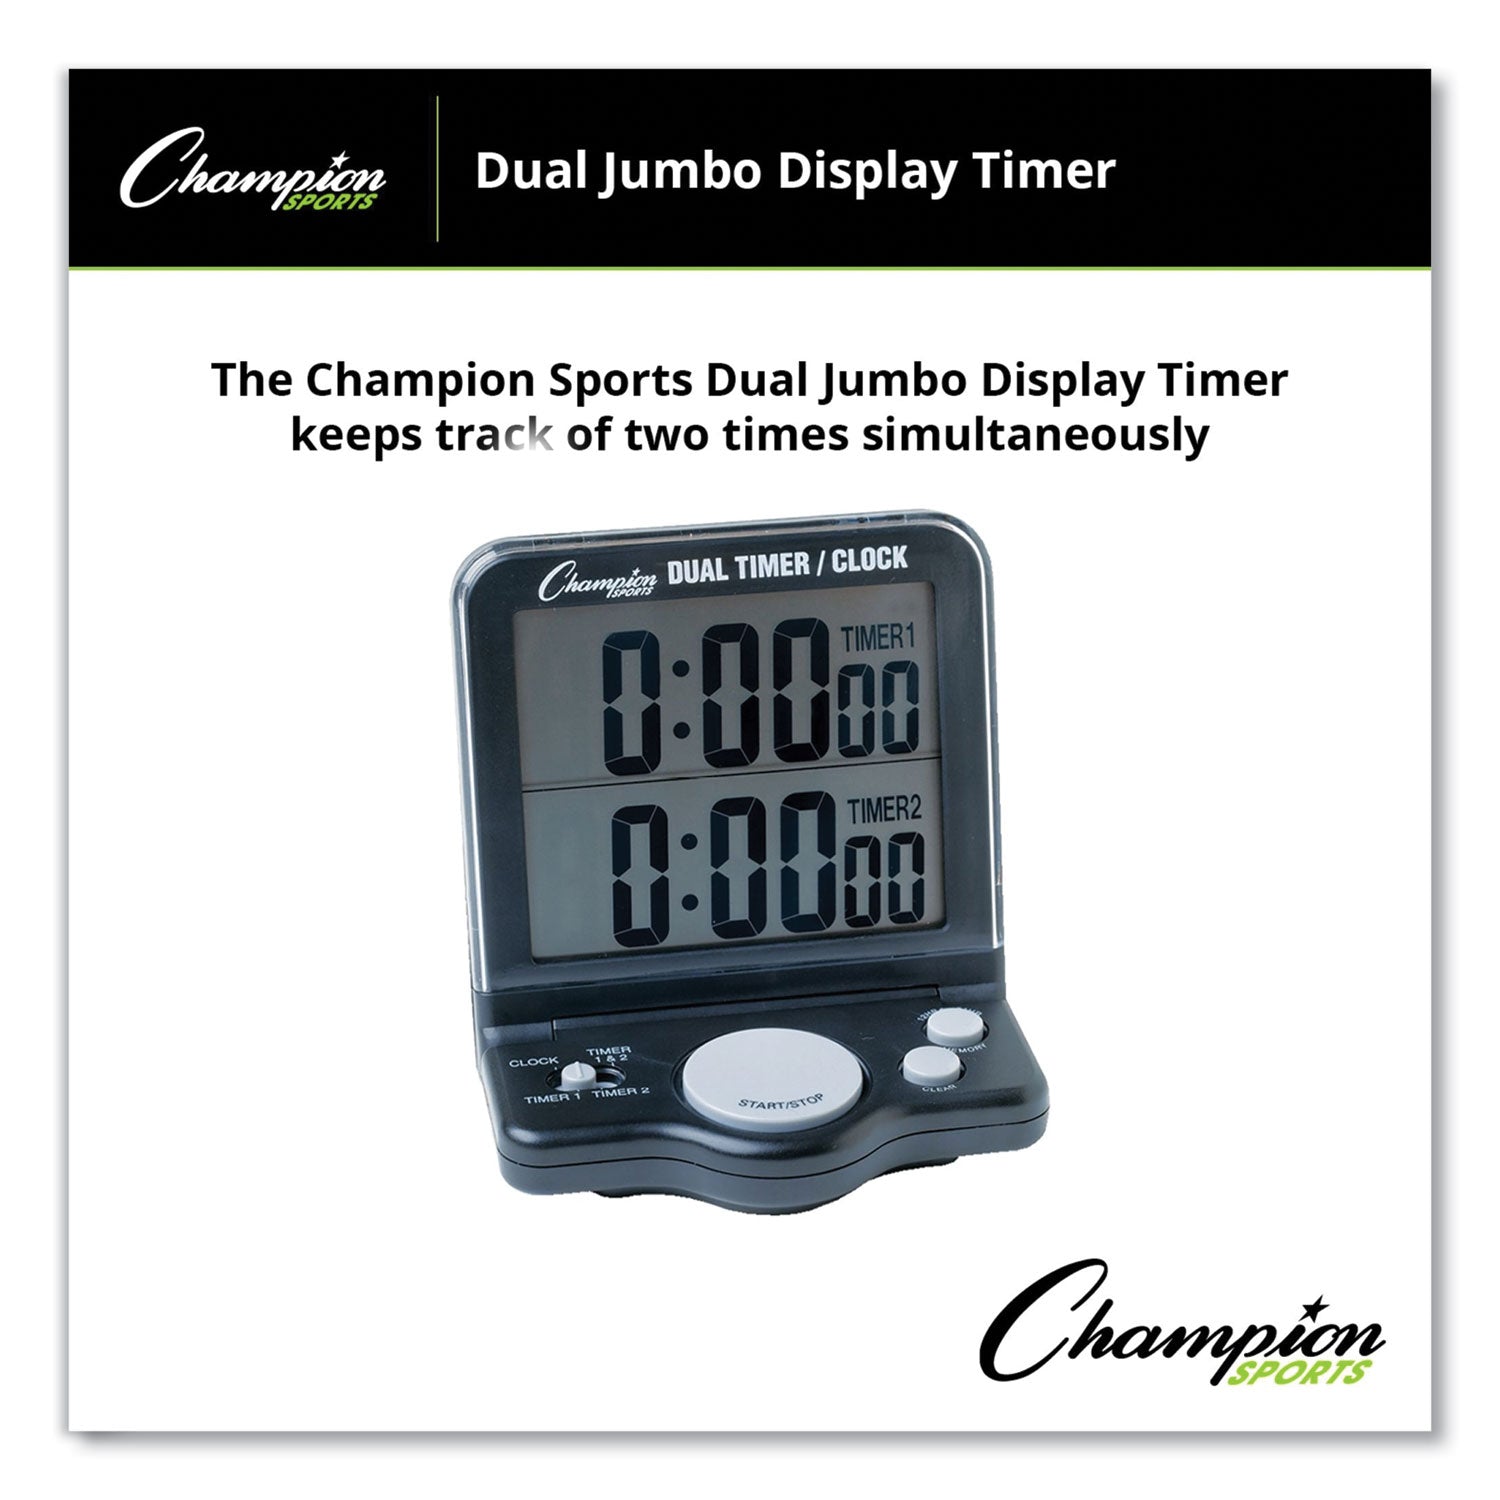 Dual Timer/Clock with Jumbo Display, LCD, 3.5 x 1 x 4.5, Black - 